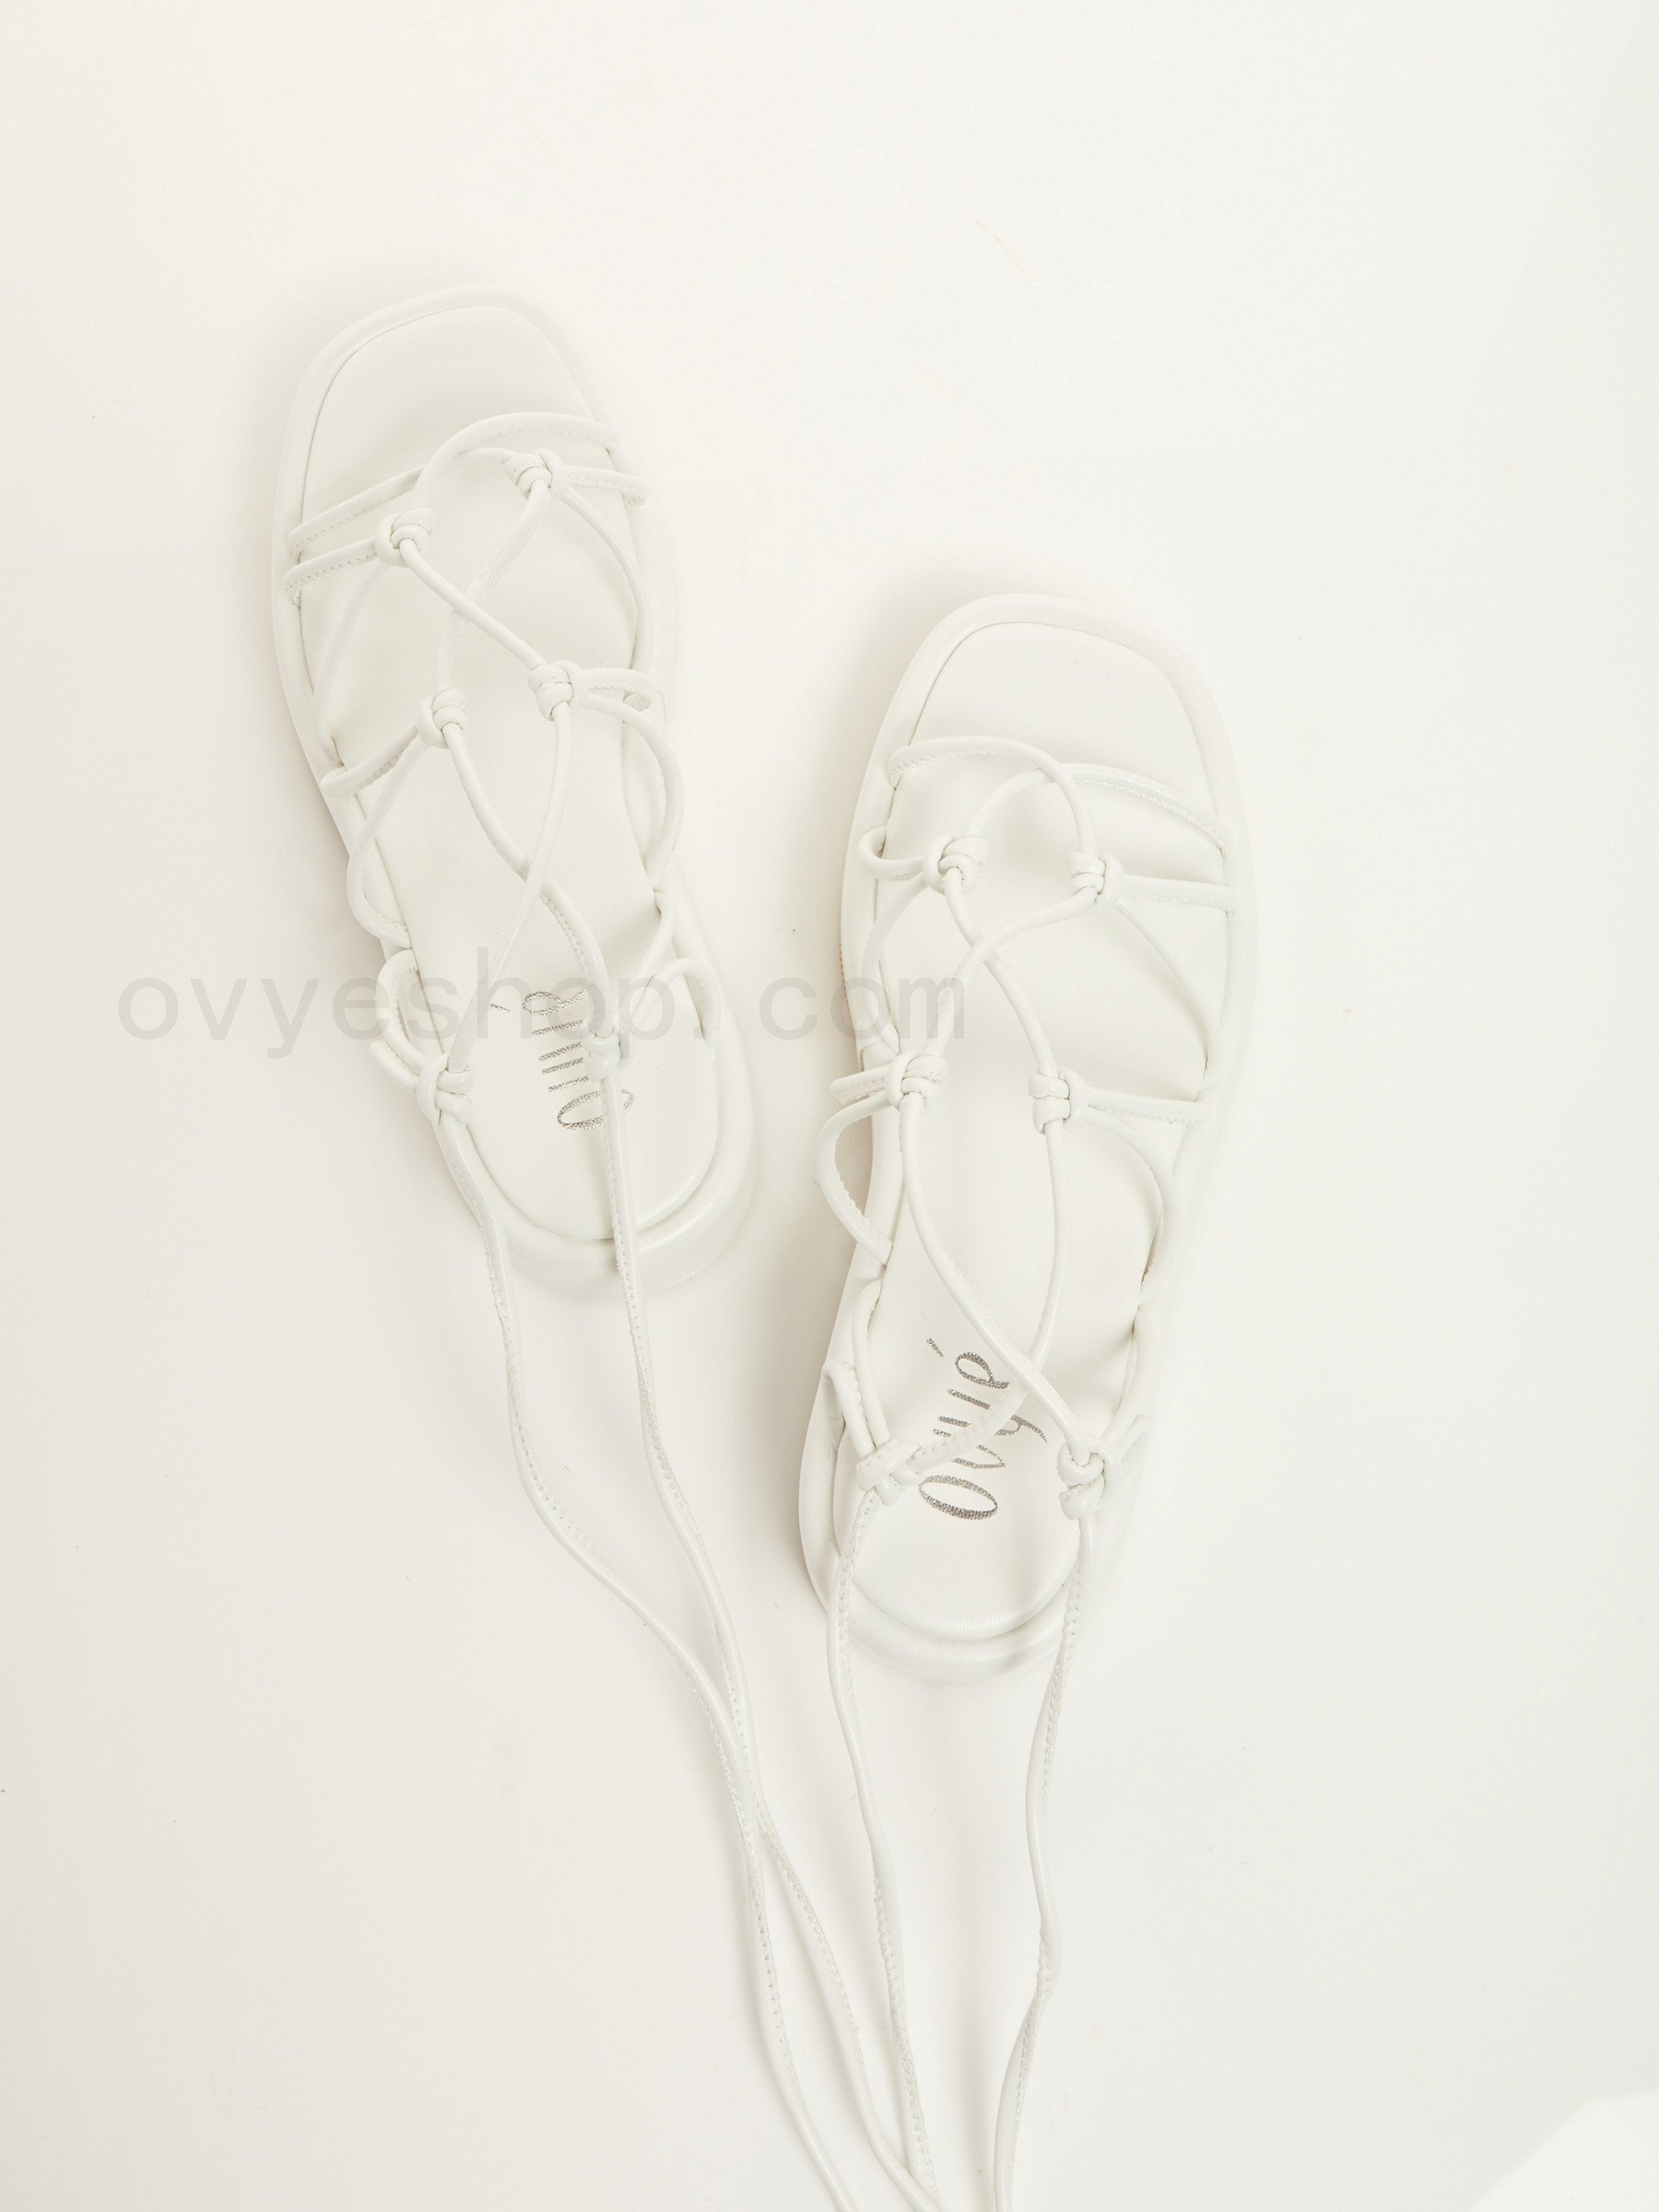 ovy&#232; shop Greek Flat Sandals F0817885-0454